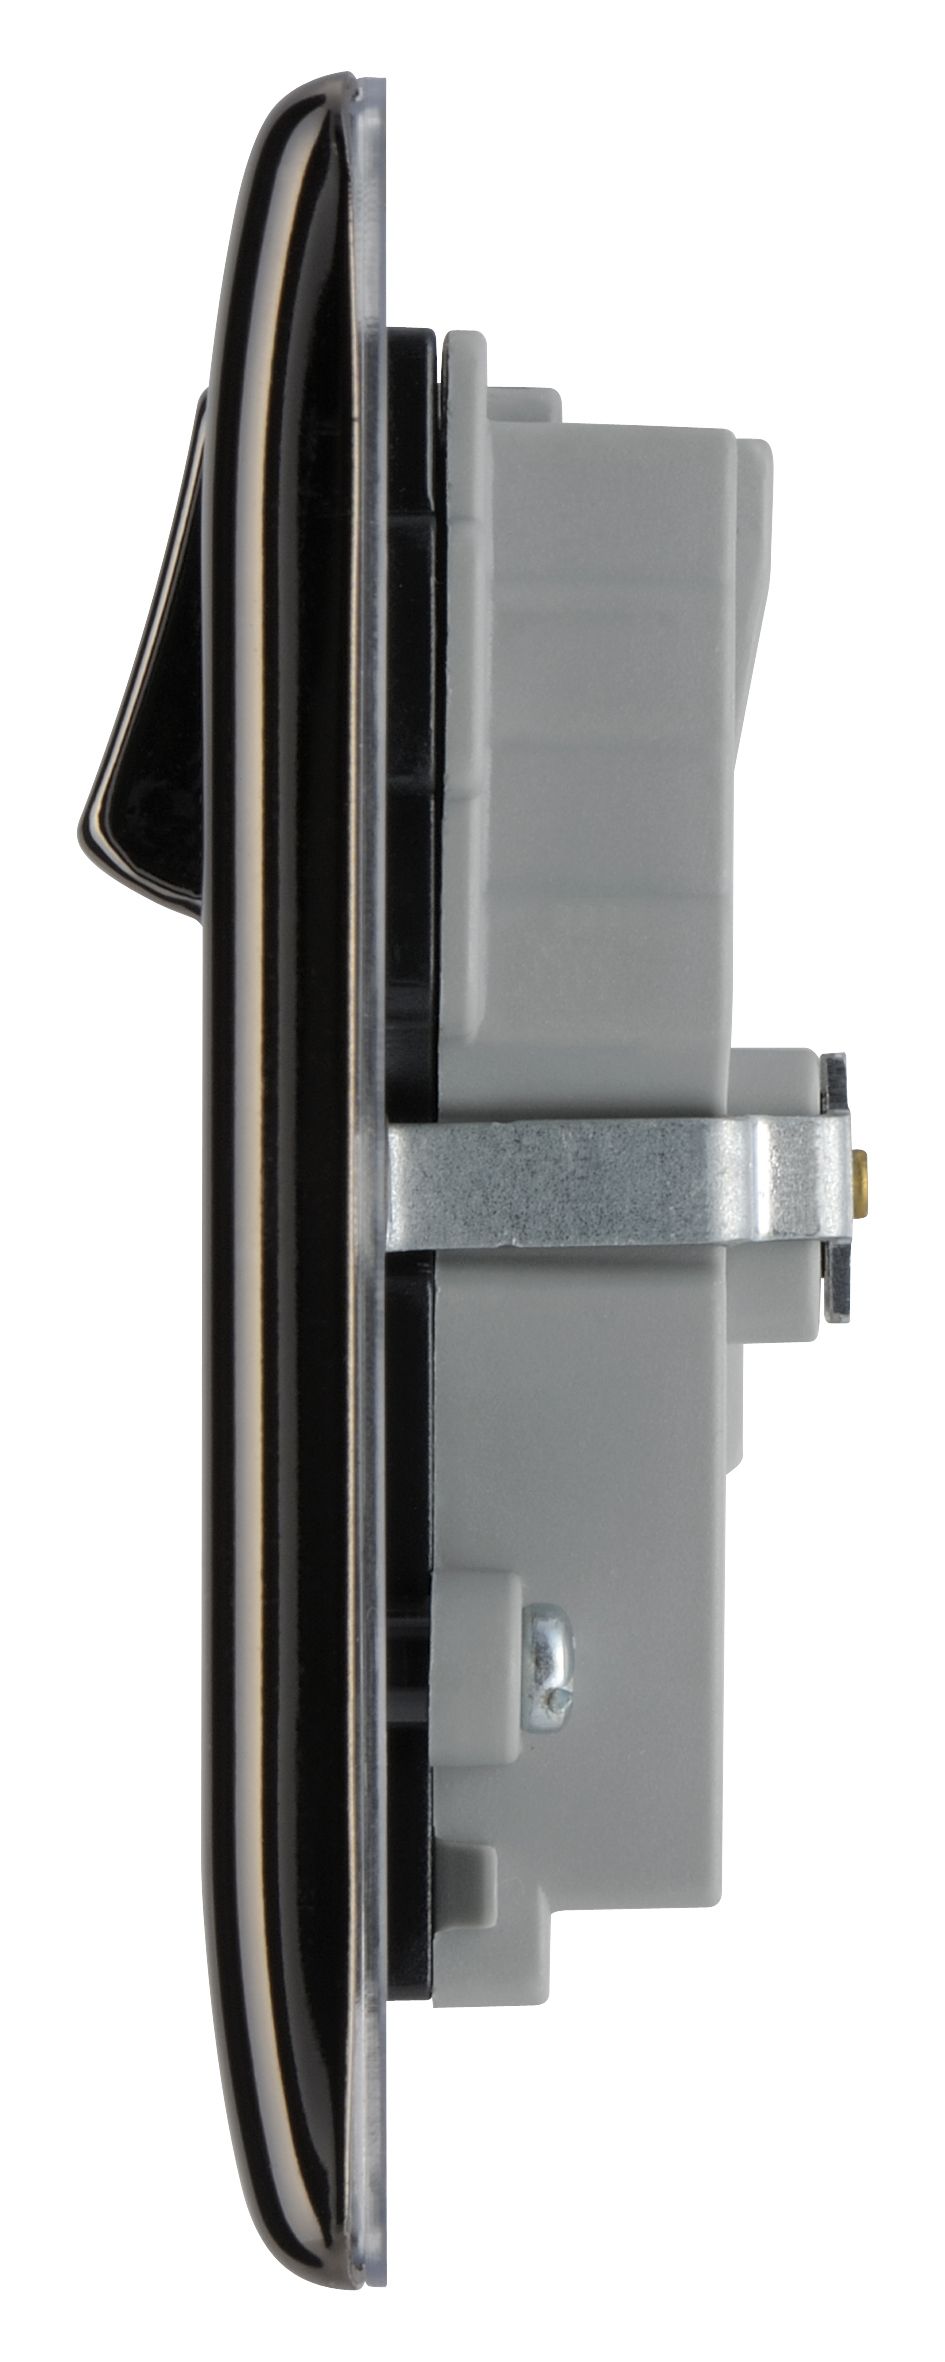 British General Black nickel effect Double USB socket, 2 x 2.1A USB